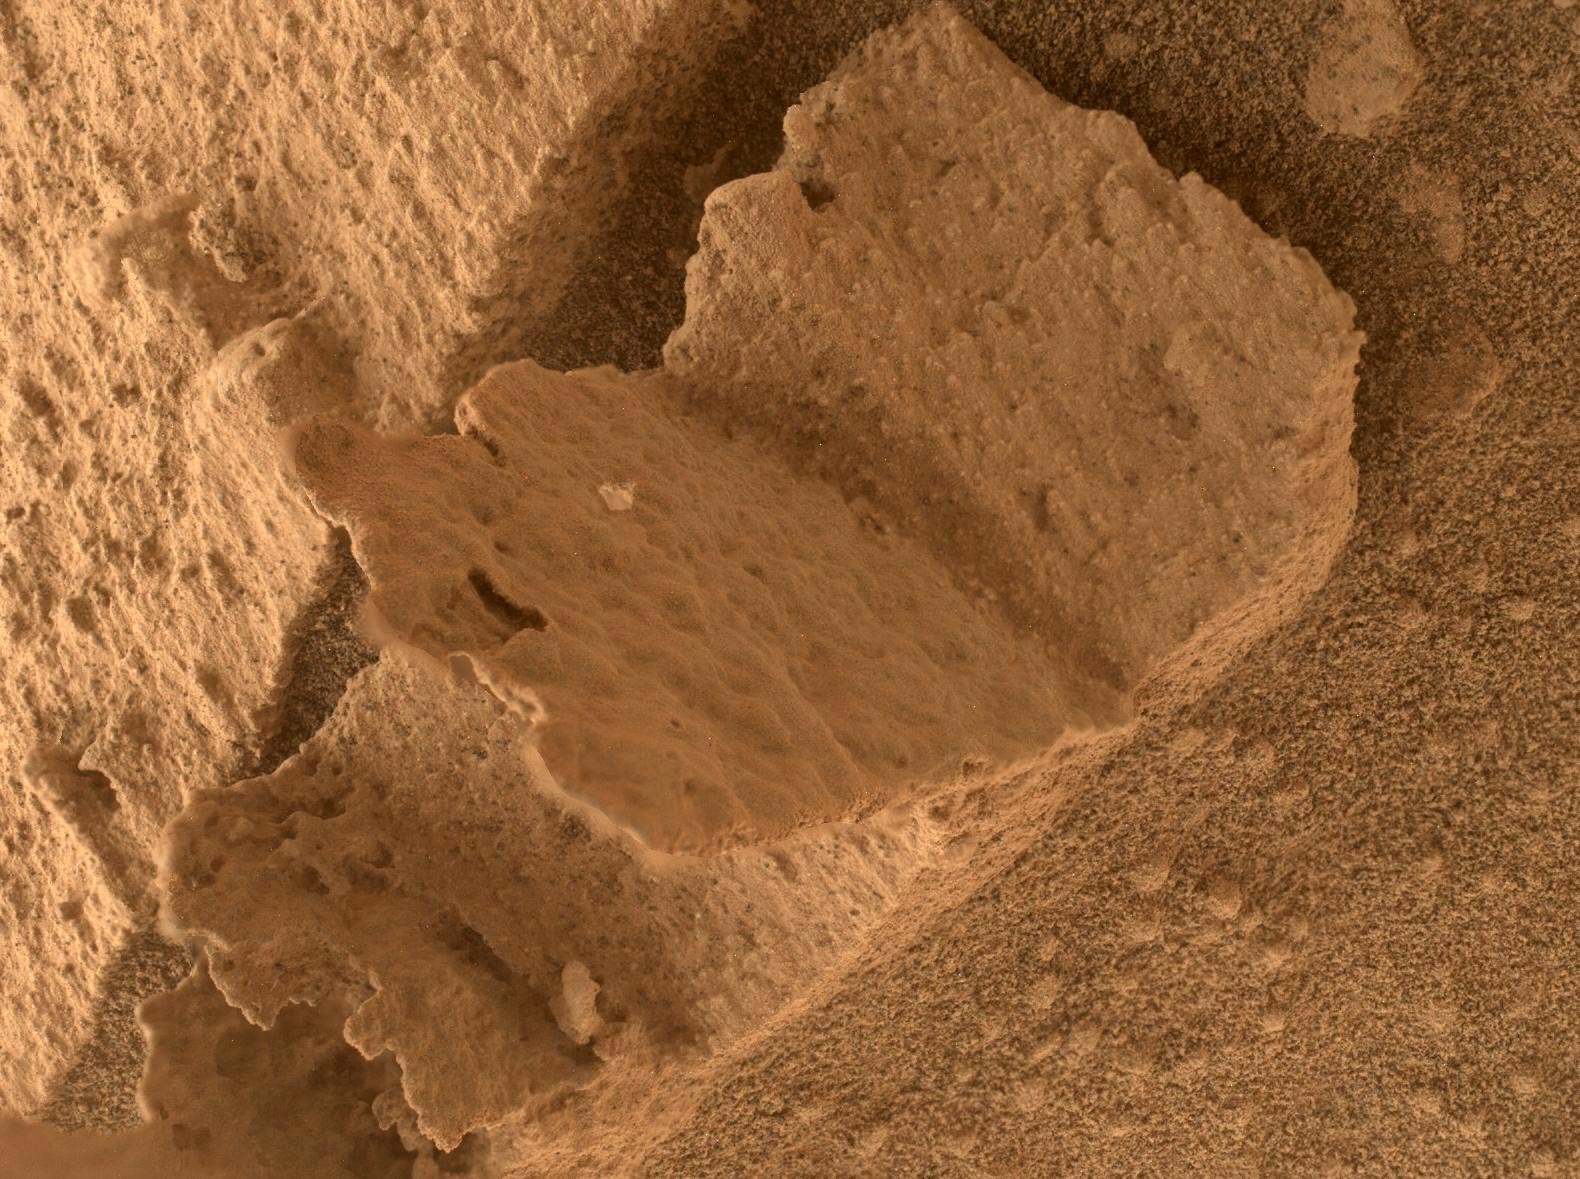 A “Novel” Discovery: NASA's Curiosity Rover Finds a Book-Like Rock on Mars